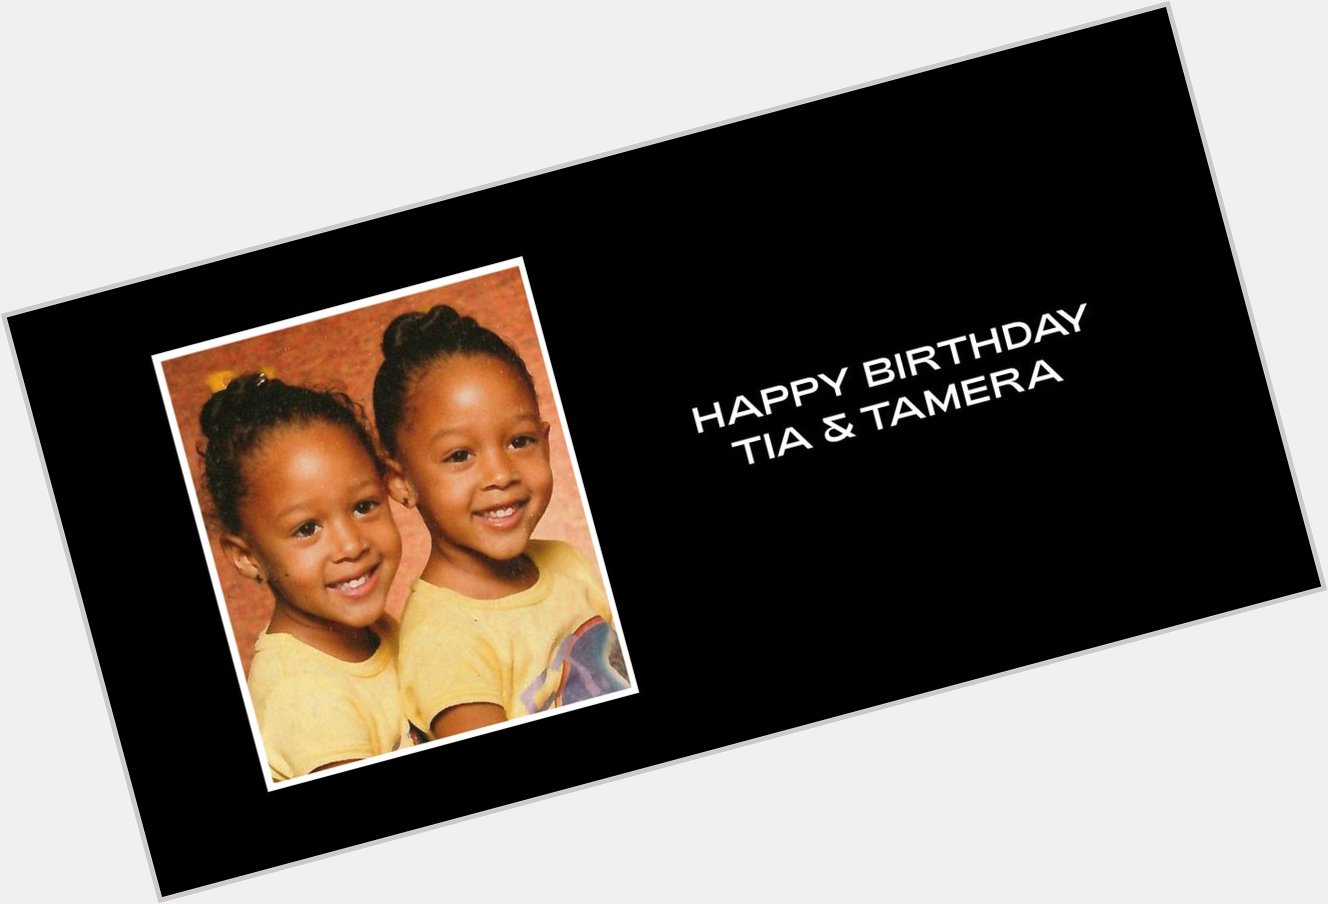  Happy Birthday Tia & Tamera Mowry, Beck, Jaden Smith  